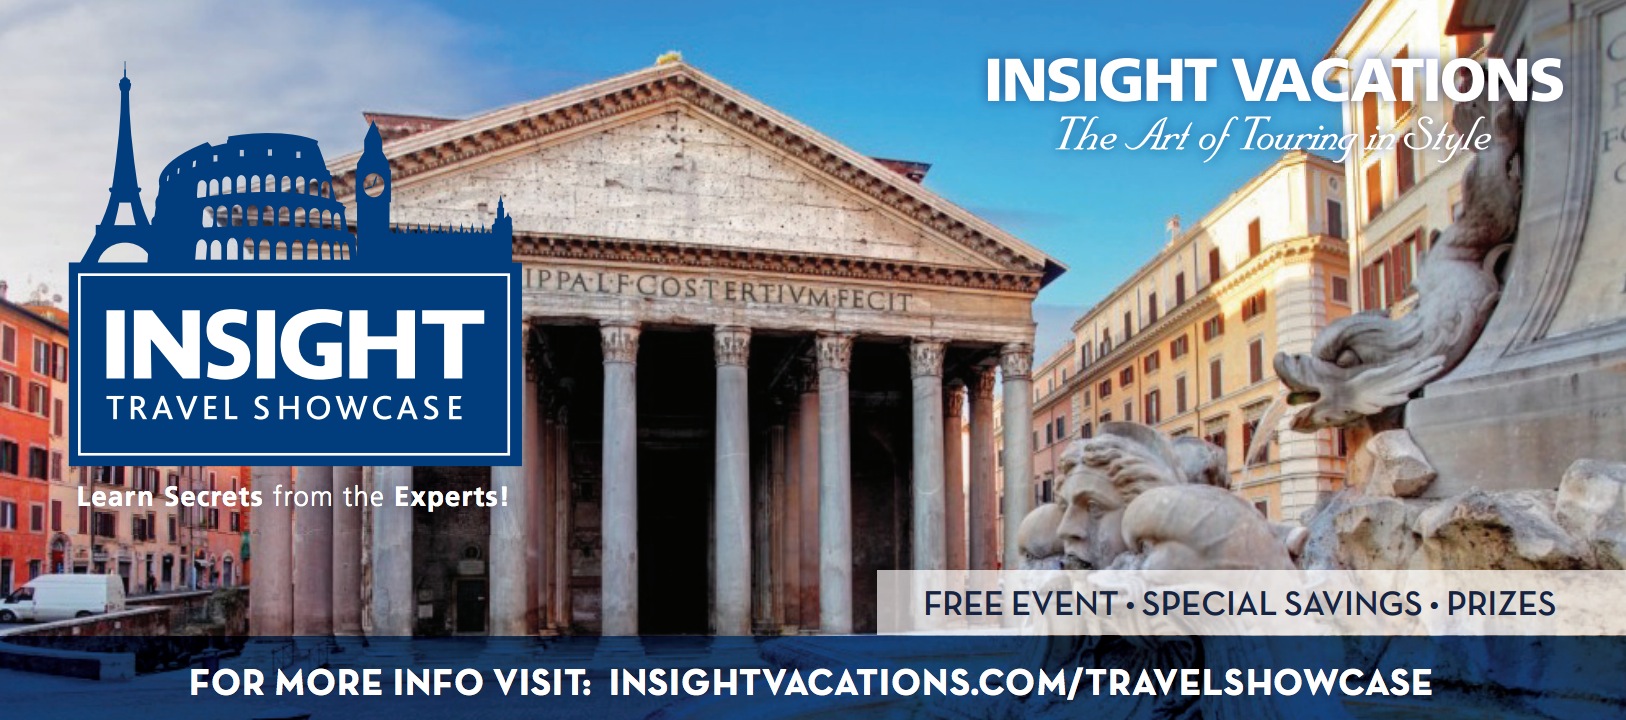 Insight Vacations Travel Showcase